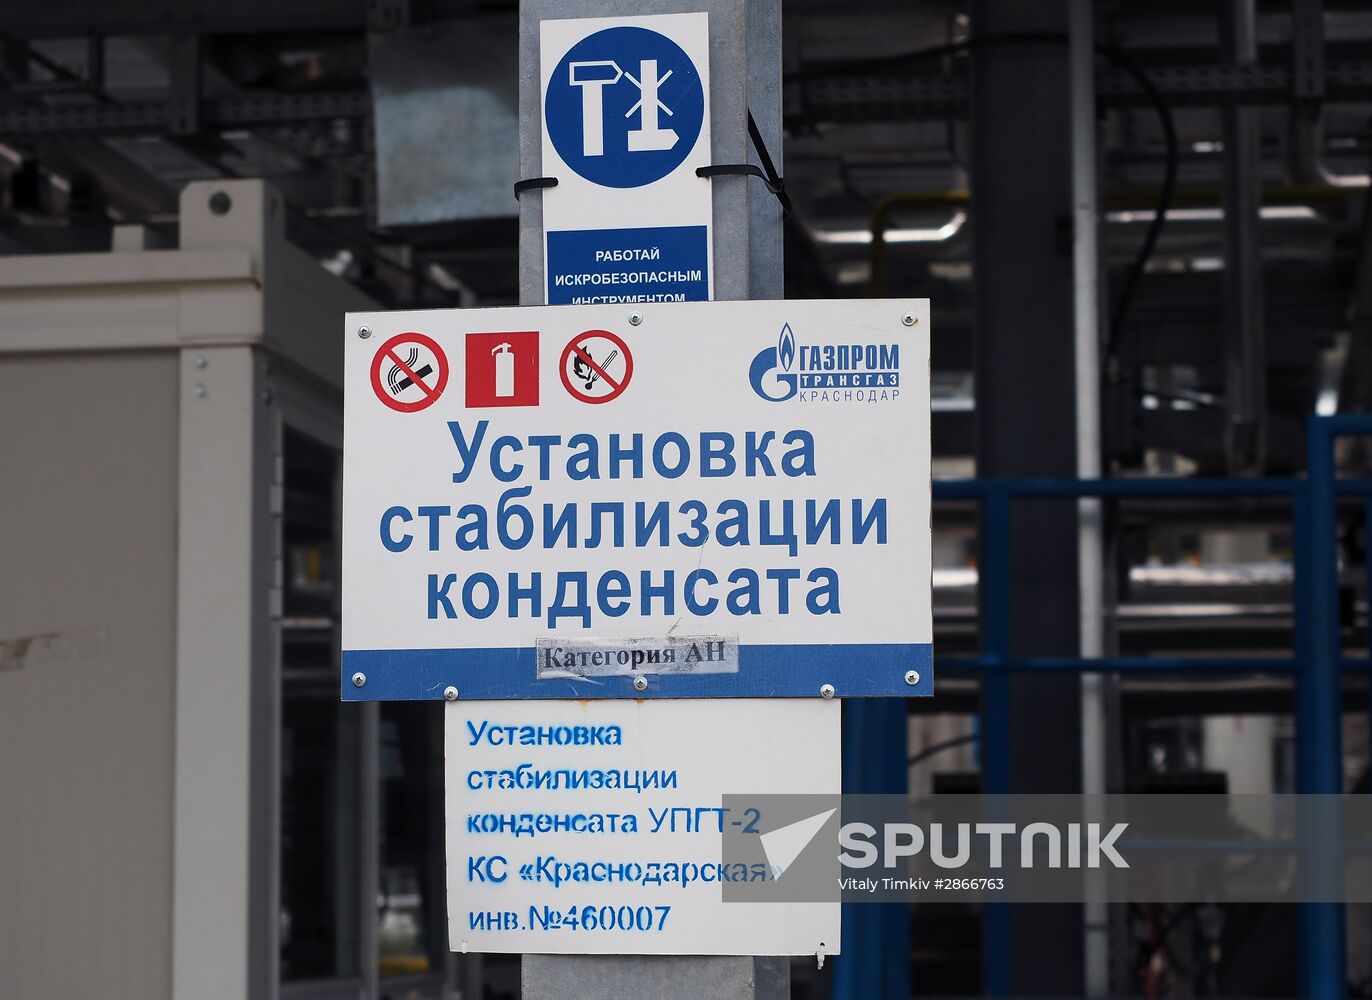 Krasnodarskaya compressor station